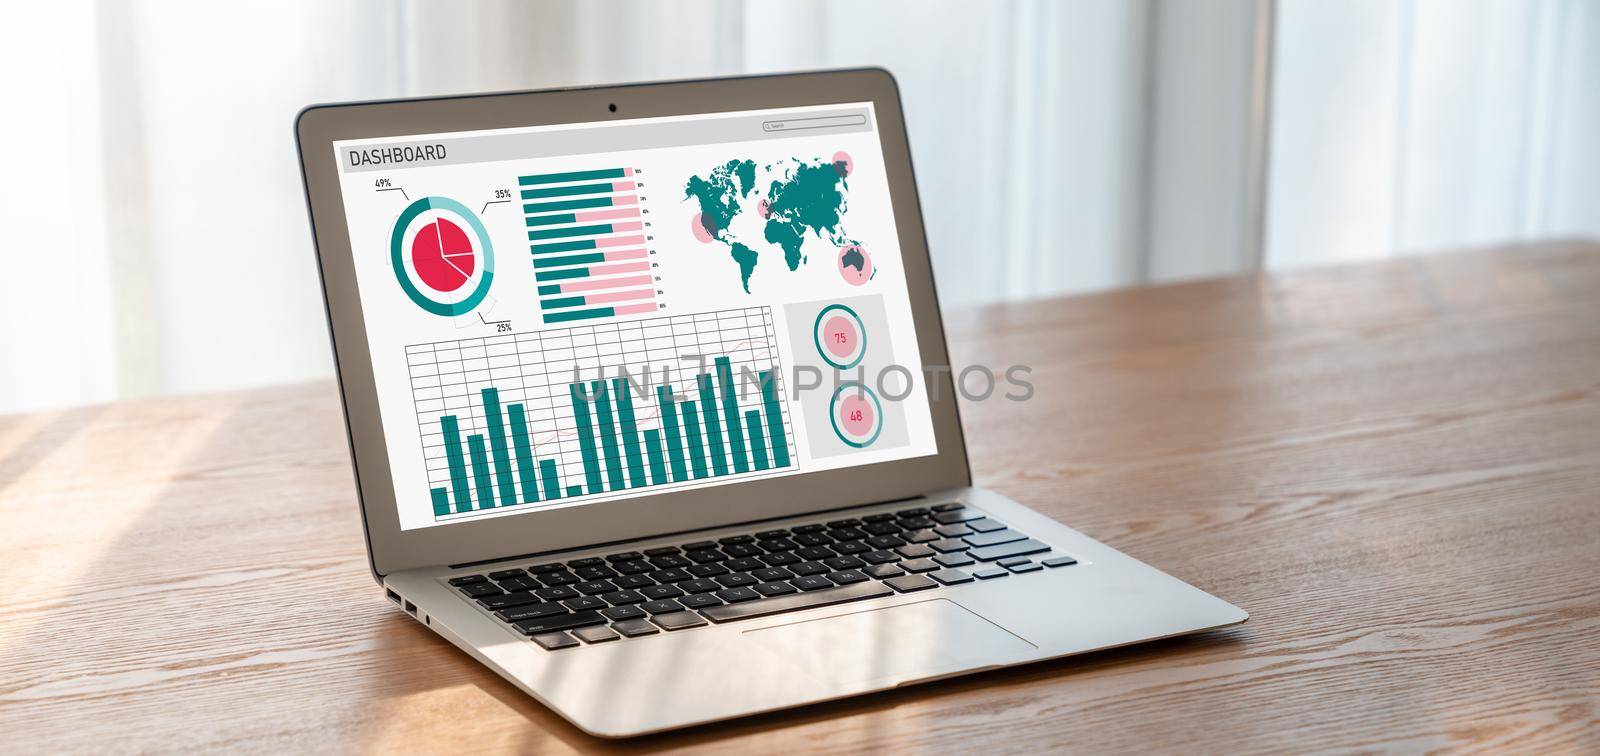 Business data dashboard provide modish business intelligence analytic by biancoblue